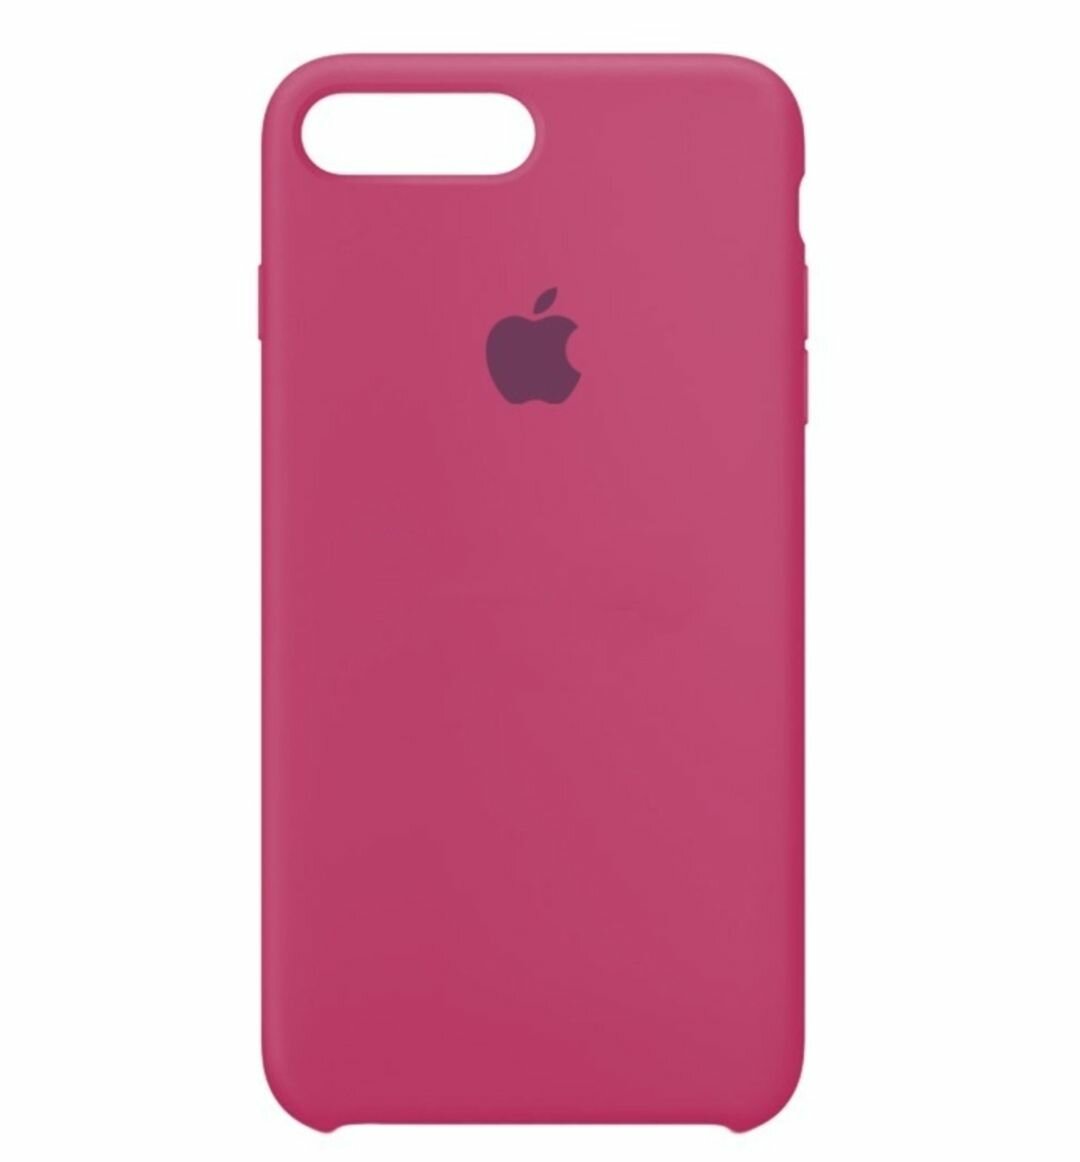 Apple iPhone 8 Plus / 7 plus, 7+, 8+, под оригинальный темно-розовый чехол, эпл айфон 8 плюс , 7 плюс Silicone case, замша